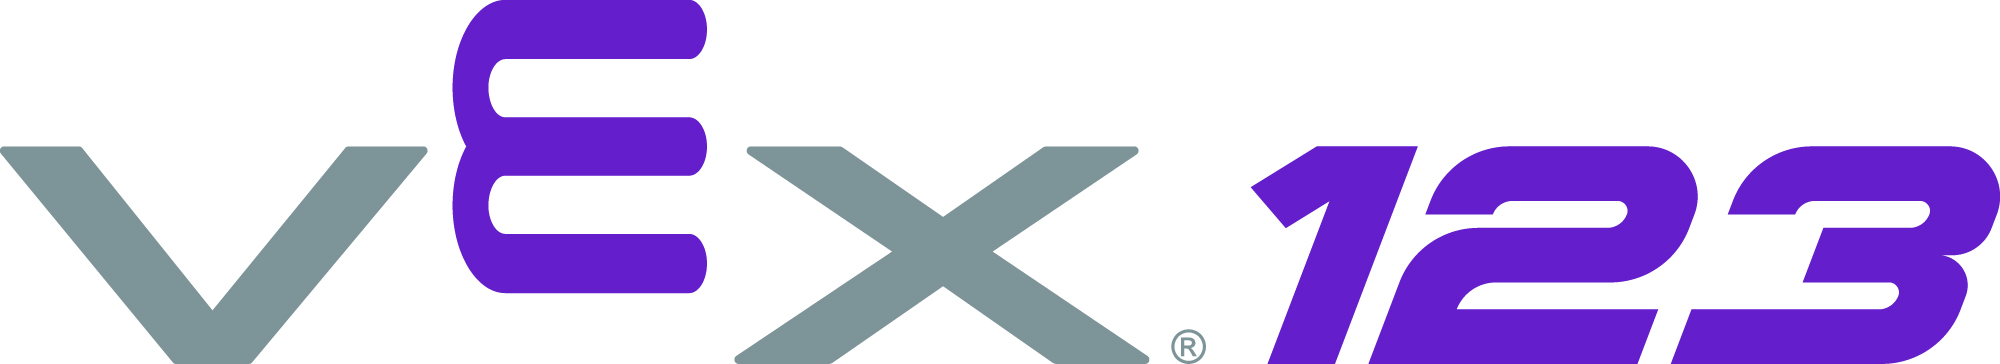 Logo VEX 123